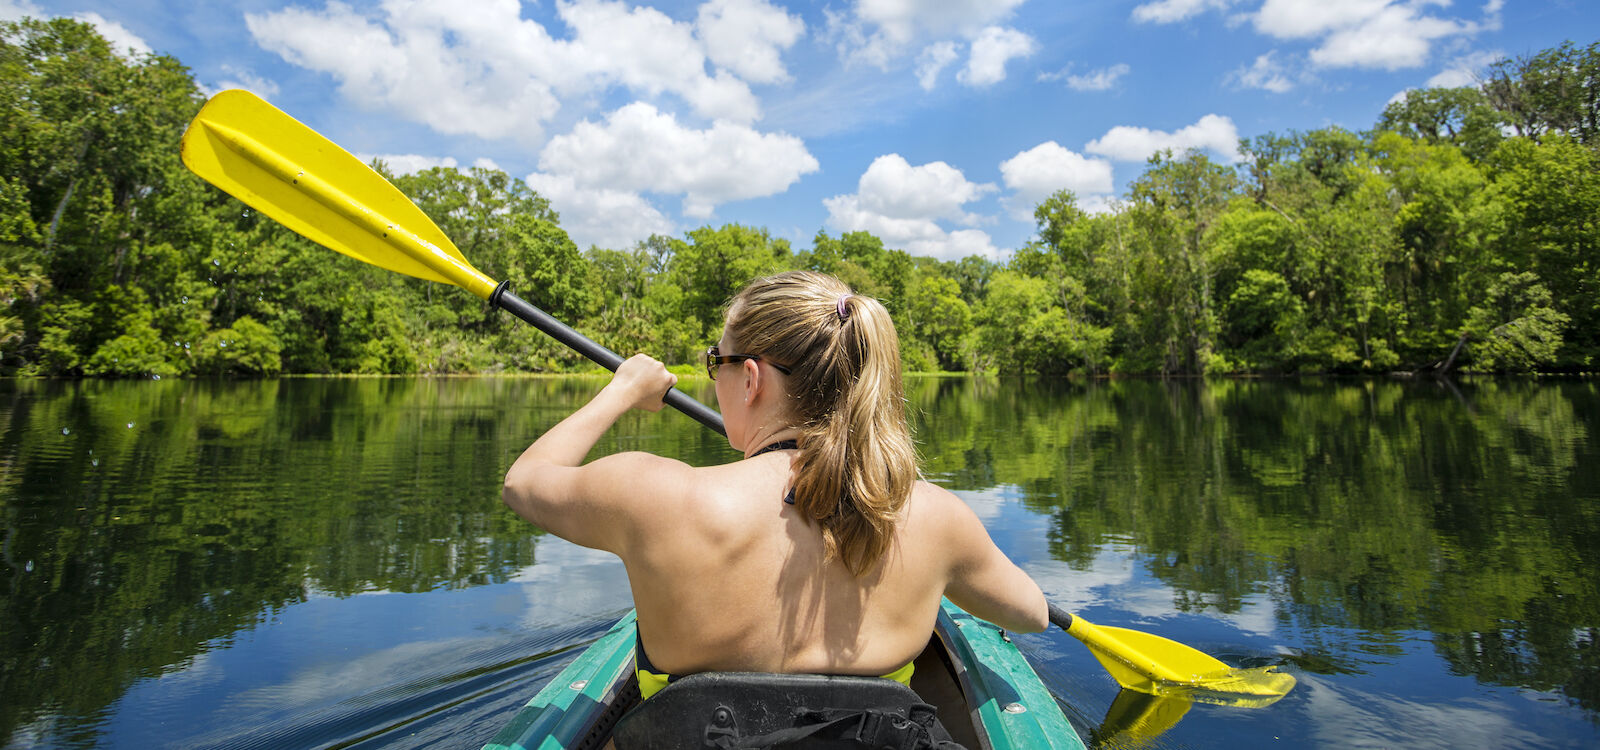 Woman kayaking along a beautiful tropical river with mangroves